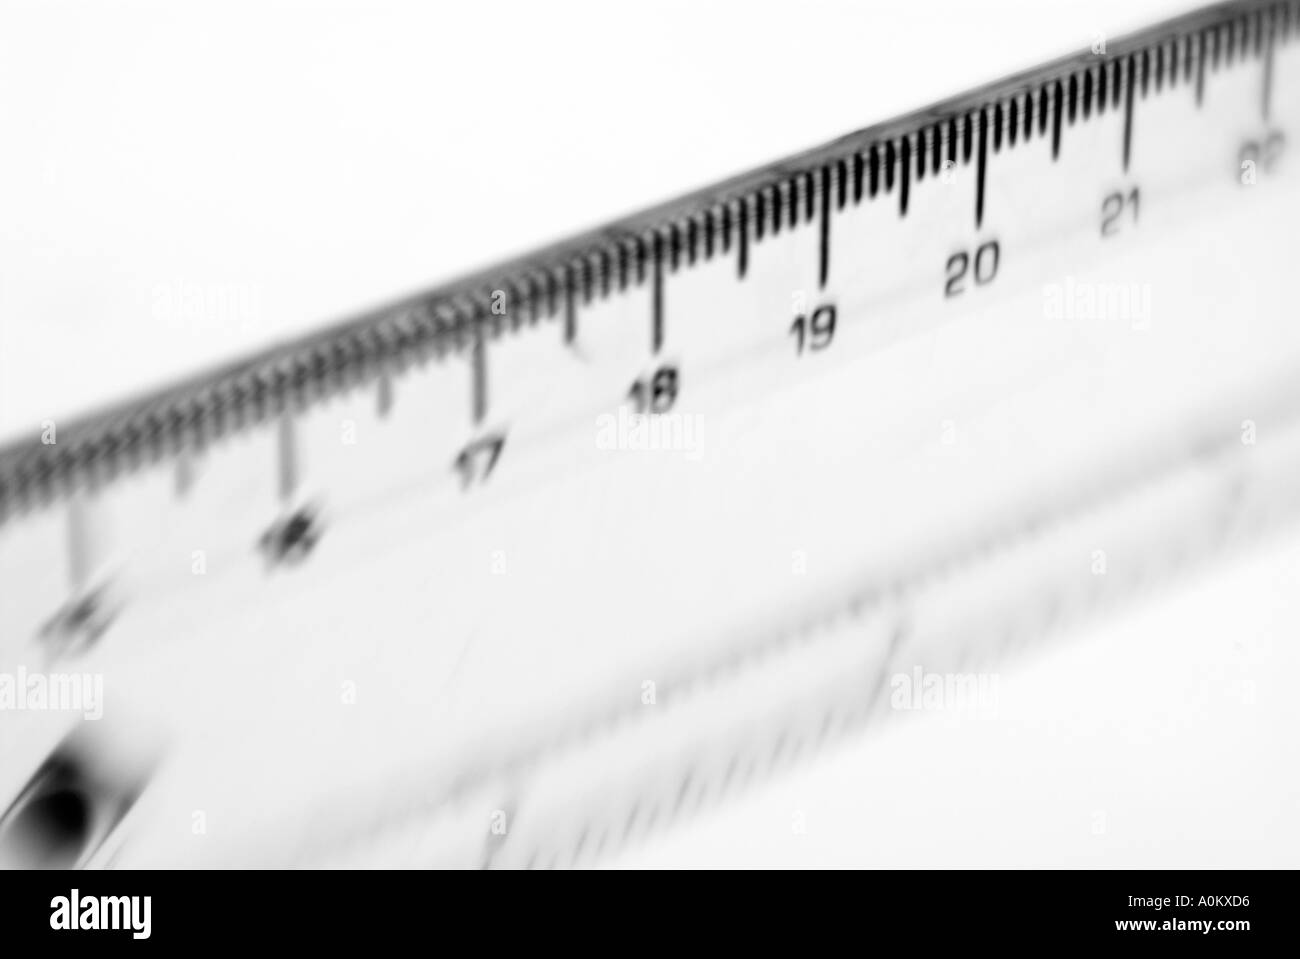 https://c8.alamy.com/comp/A0KXD6/ruler-measure-measurement-stick-measuring-units-distance-mm-inch-inches-A0KXD6.jpg